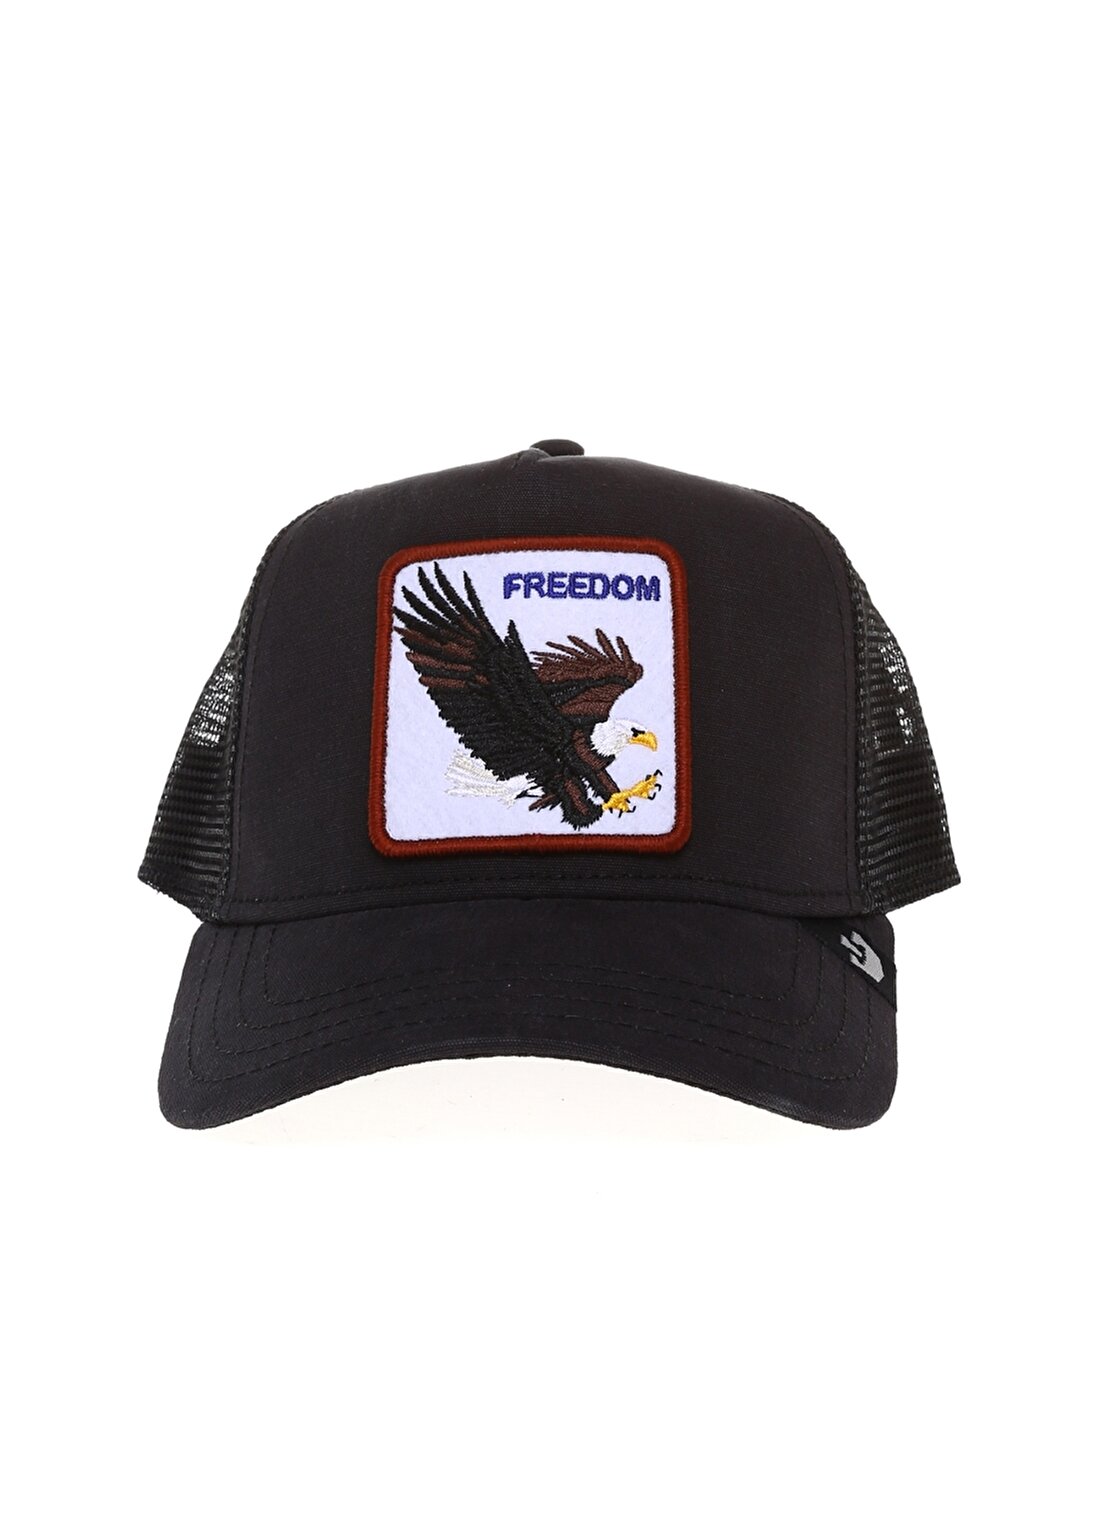 Goorin Bros 101-0209 Freedom Siyah Unisex Şapka